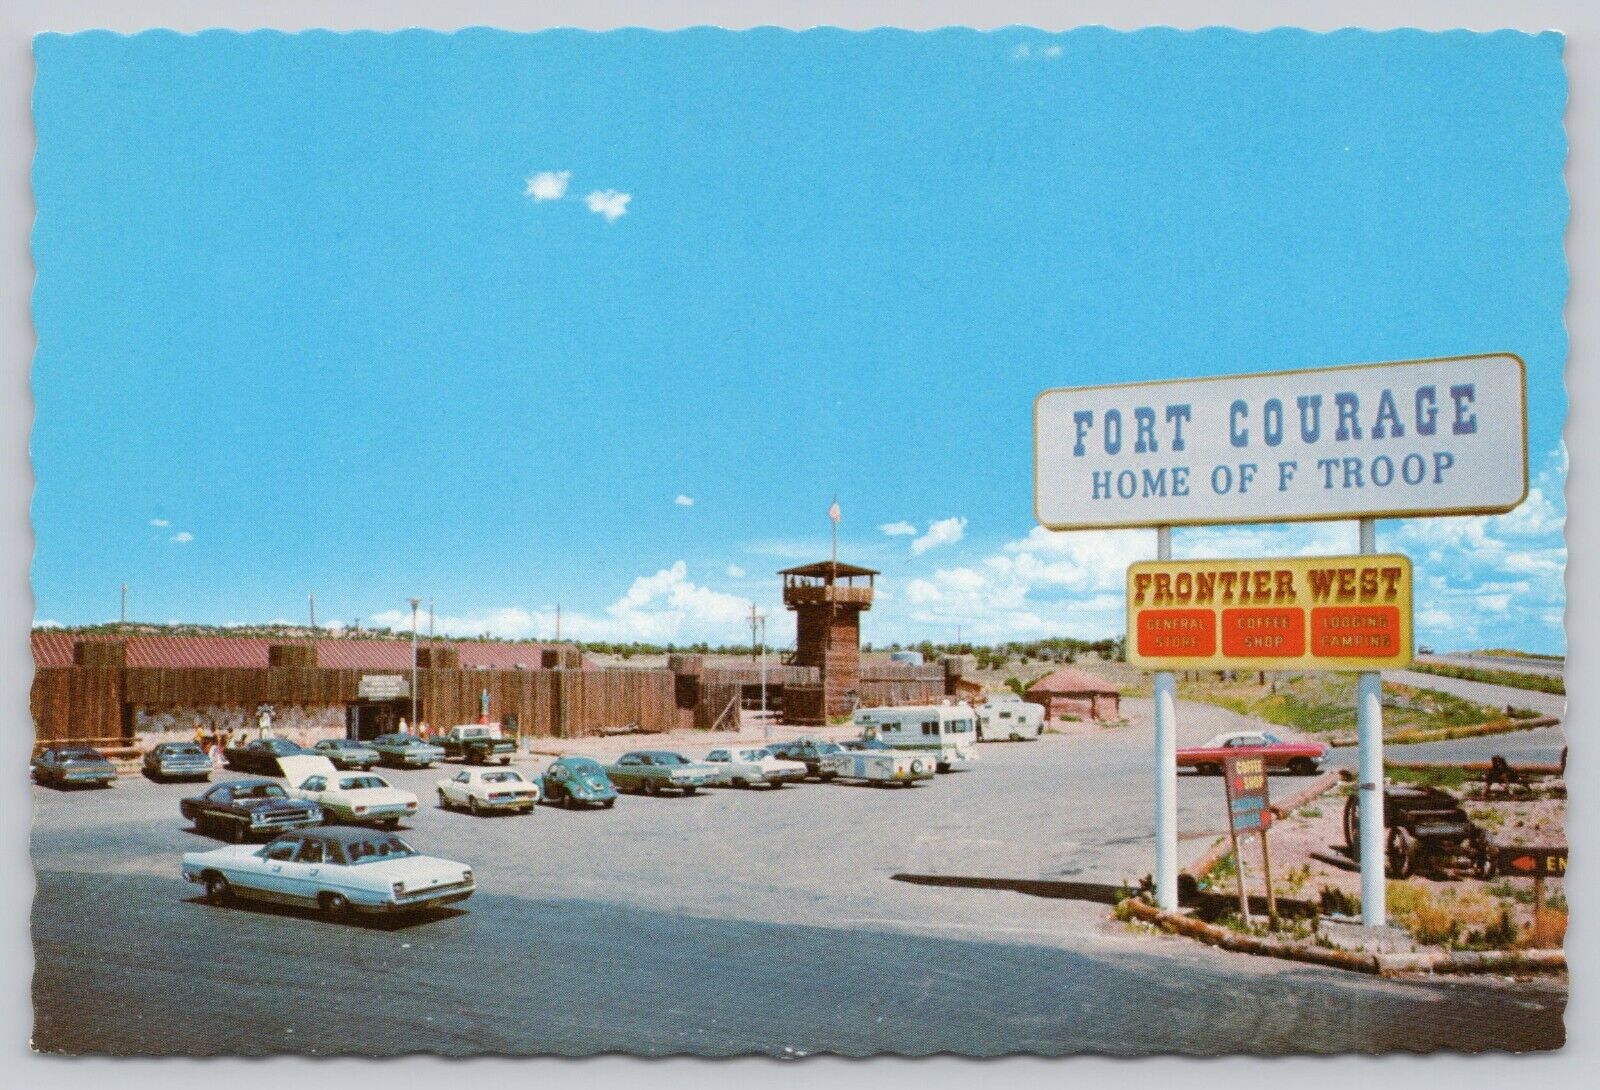 Fort Courage, Home of F Troop, Frontier West, Route 66 Houck AZ Arizona Postcard